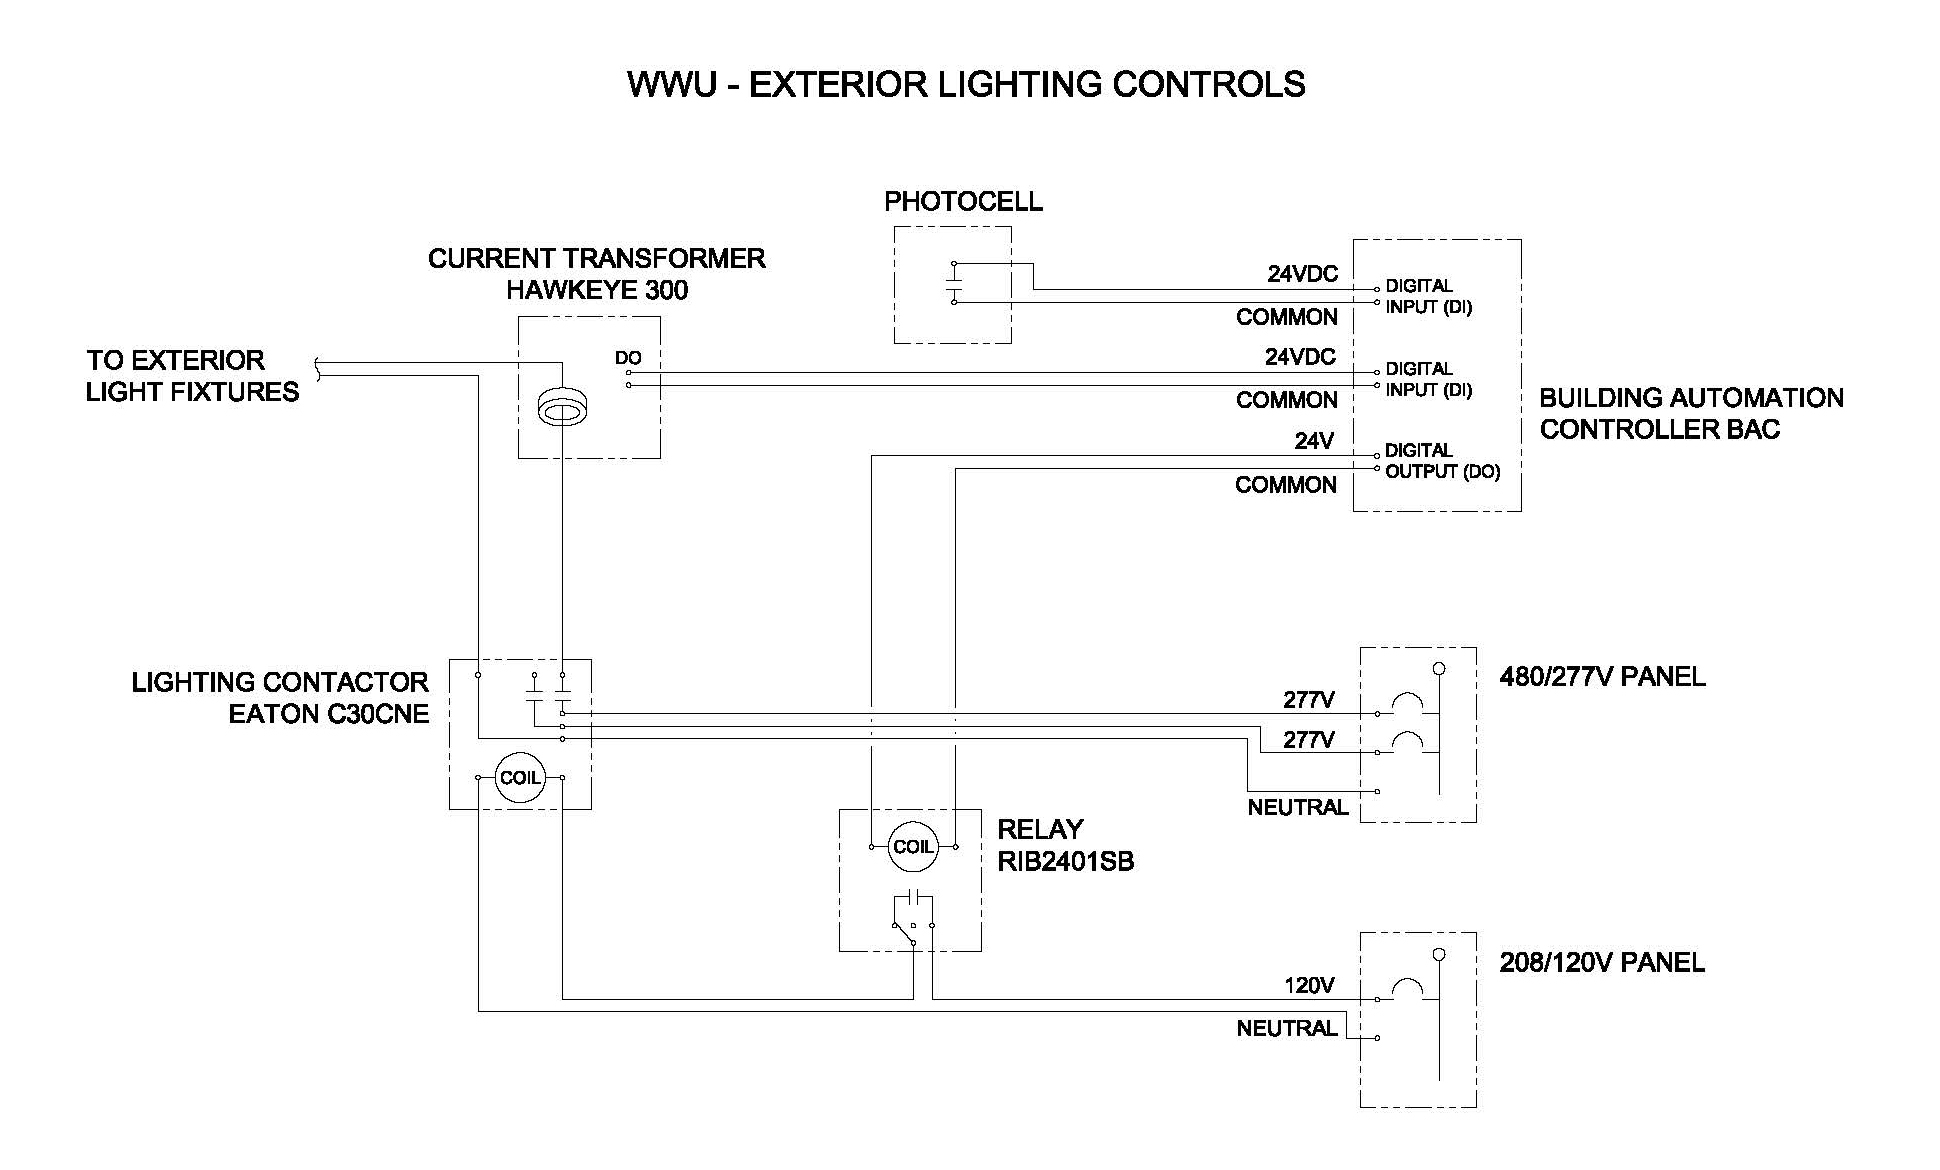 Diagram of exterior lighting controls